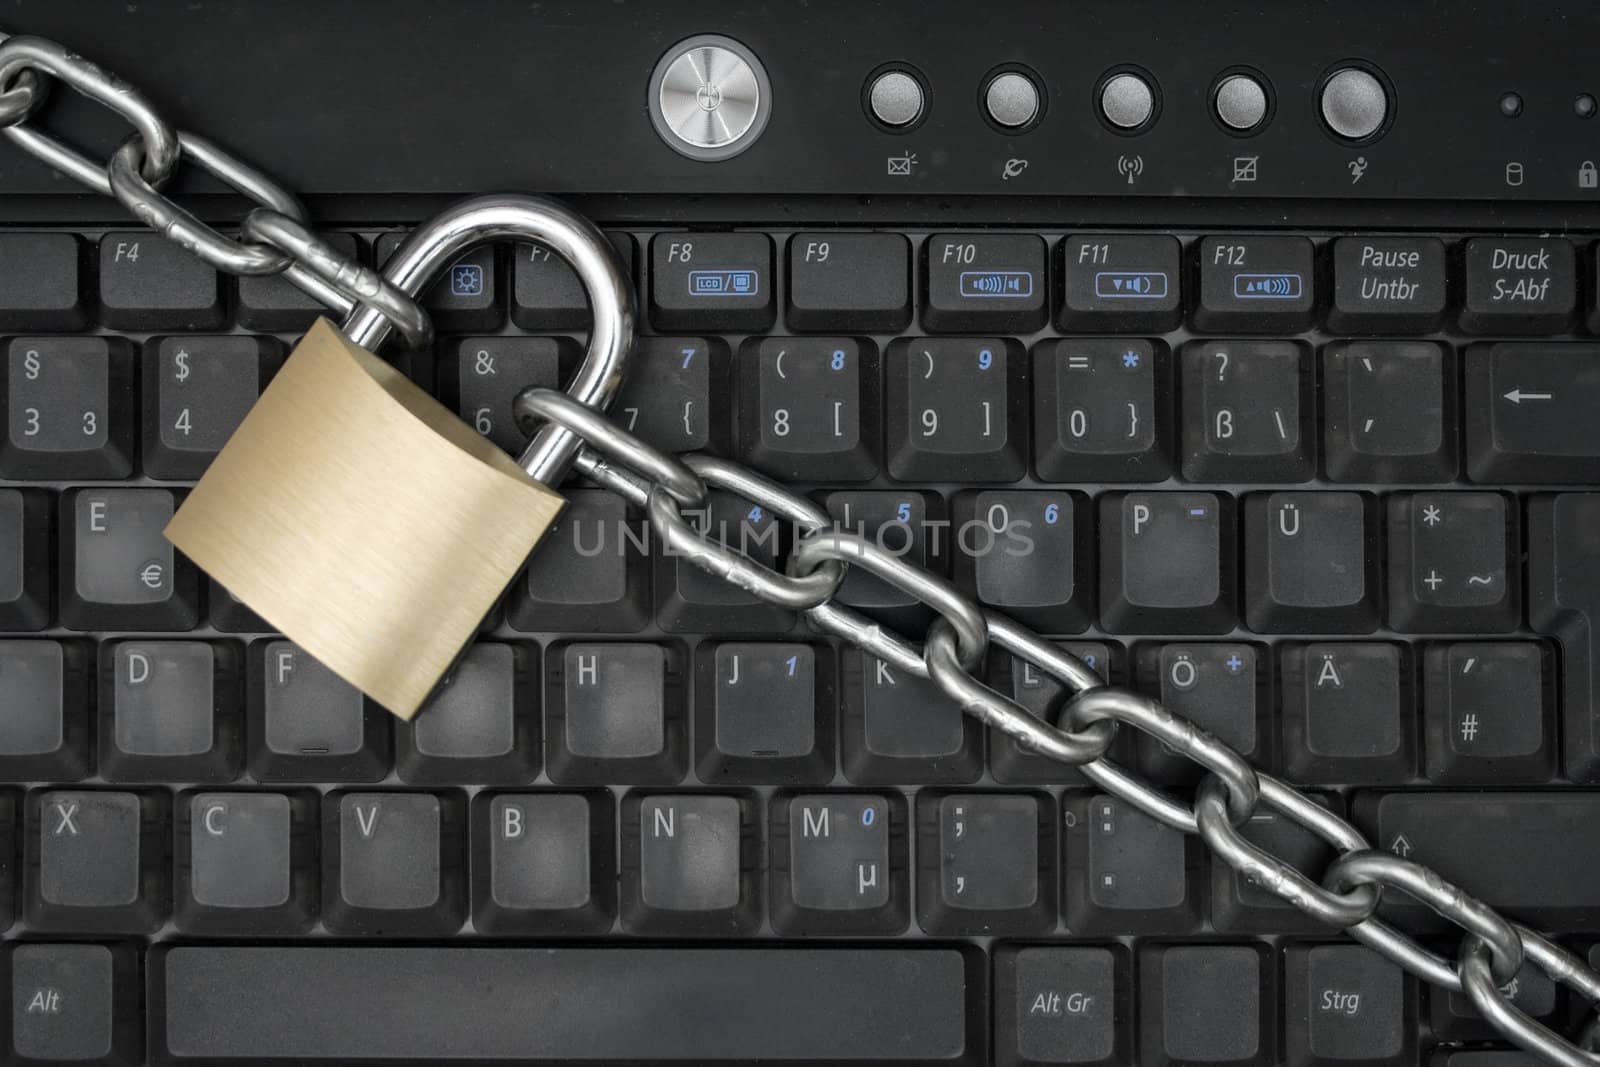 Padlock and chain locking a laptop keyboard.